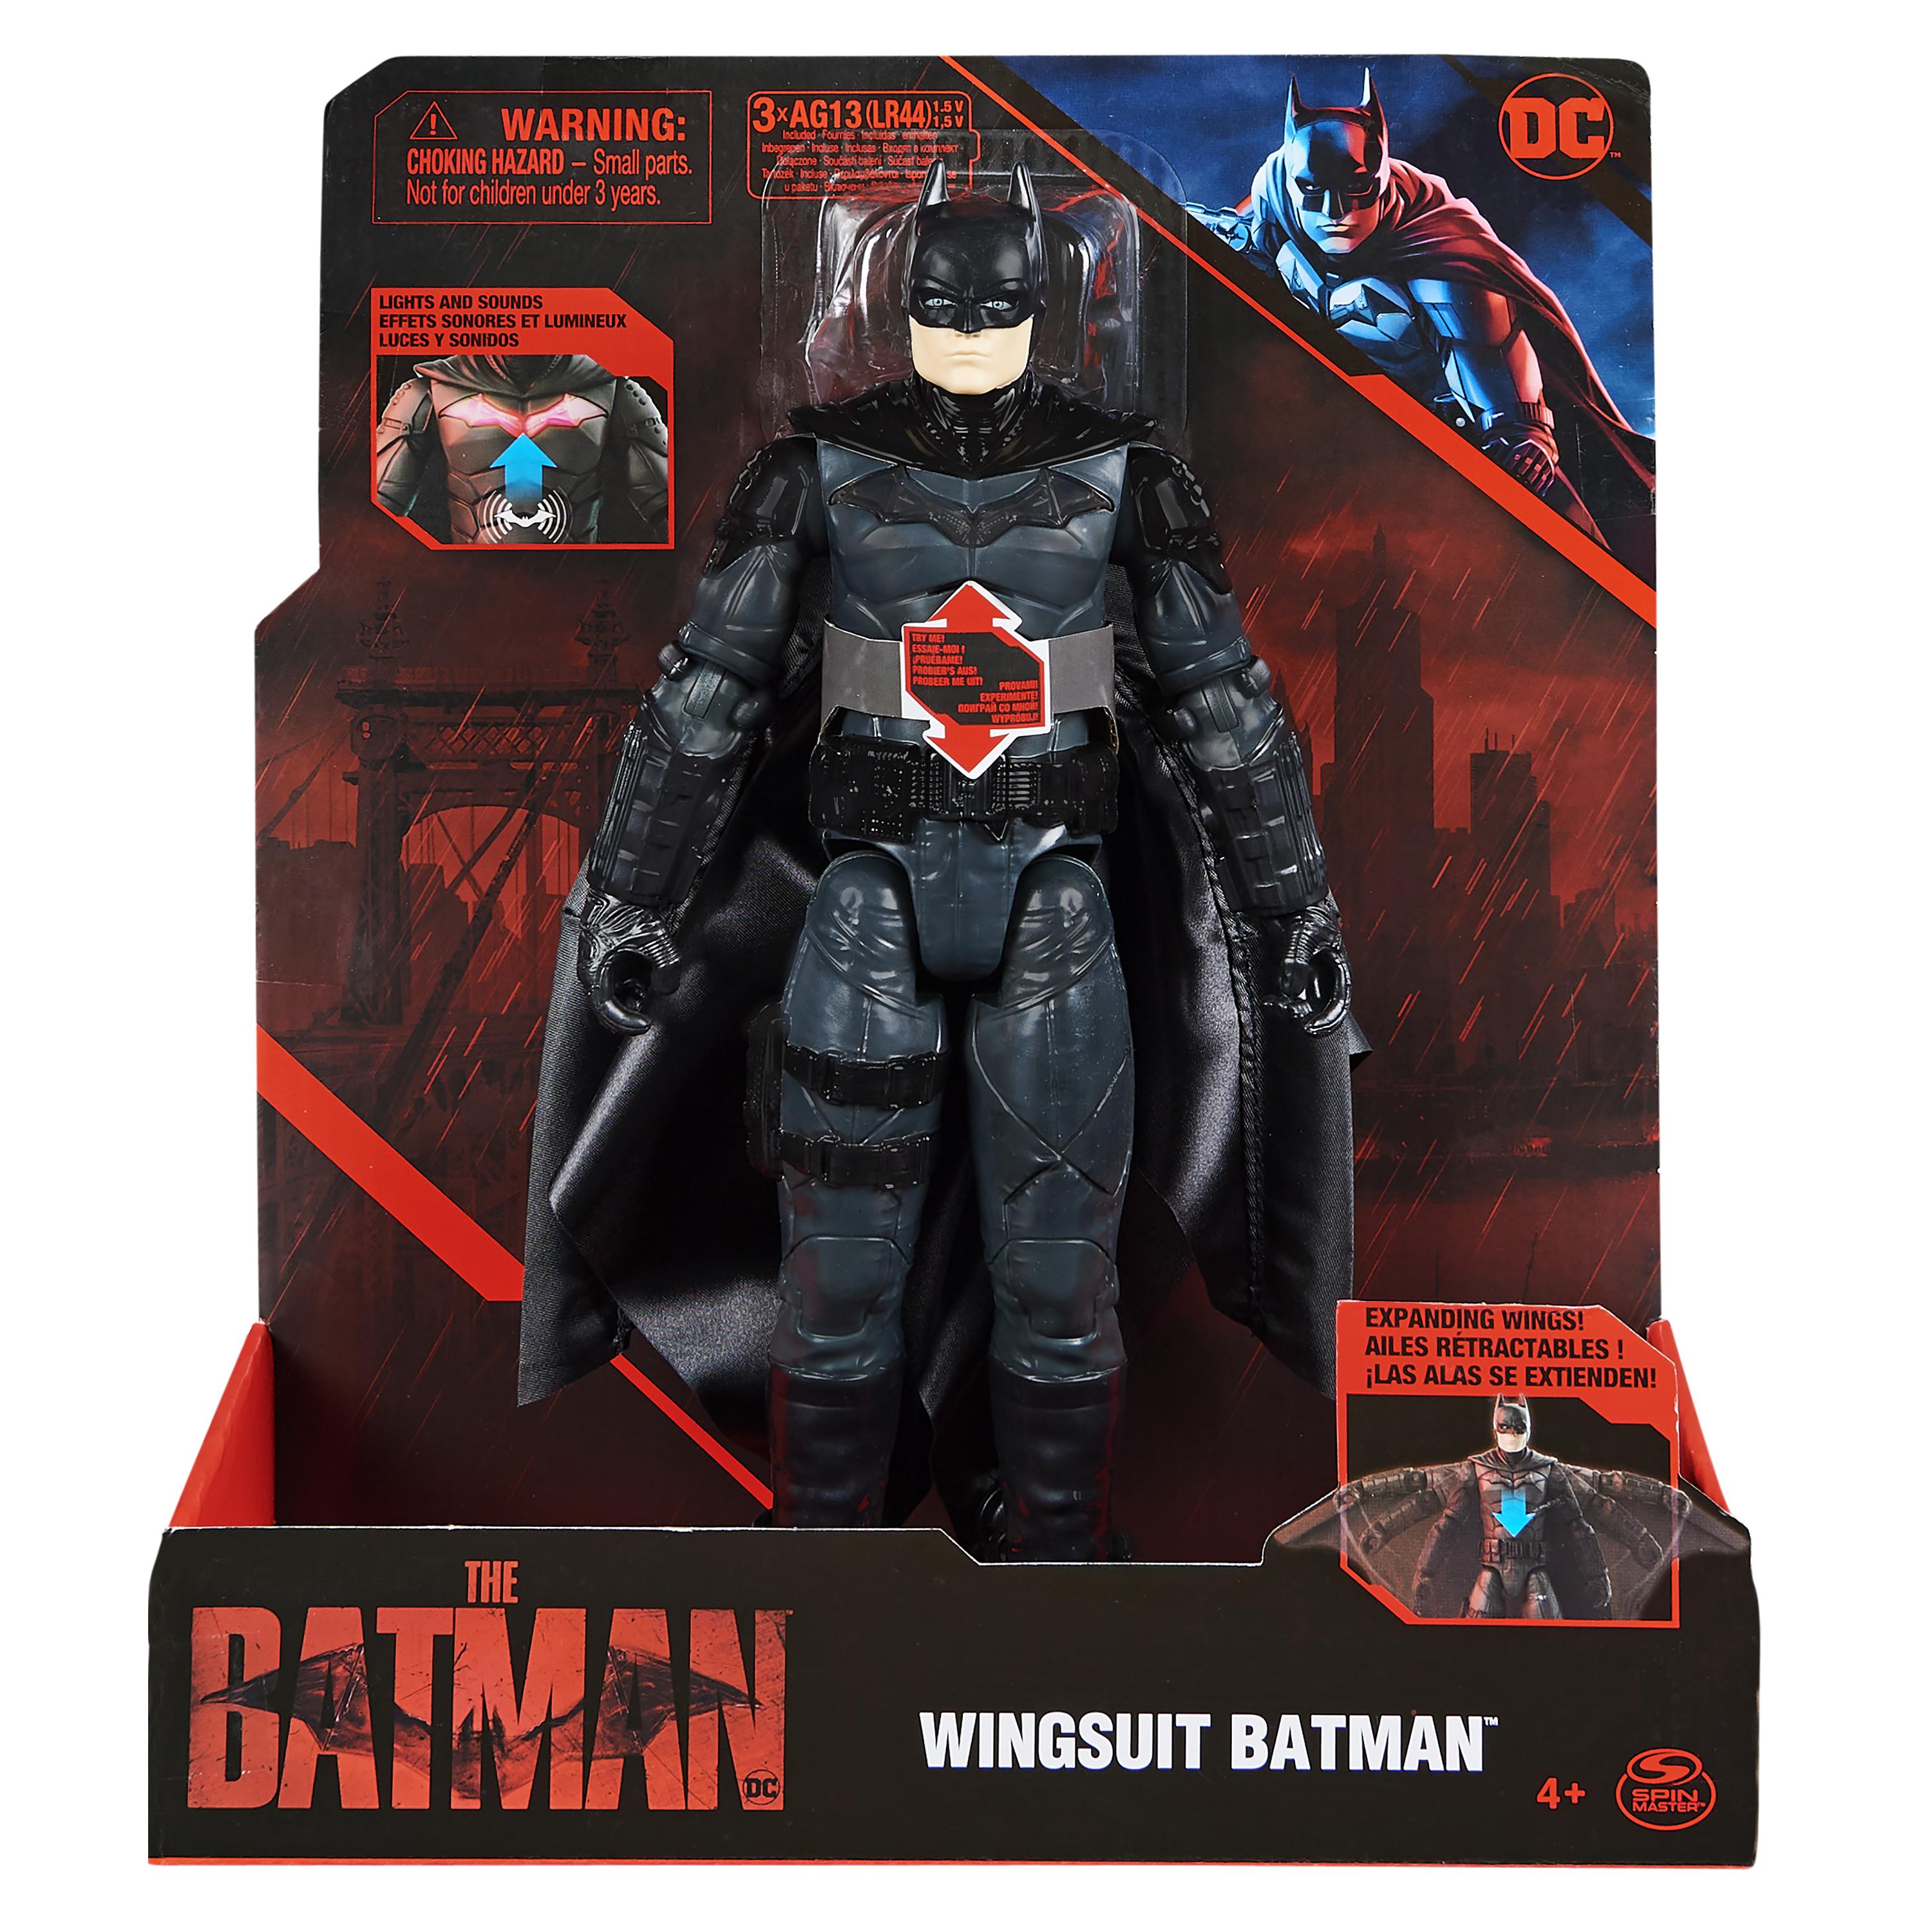 12-inch Wingsuit Batman Feature Figure 2